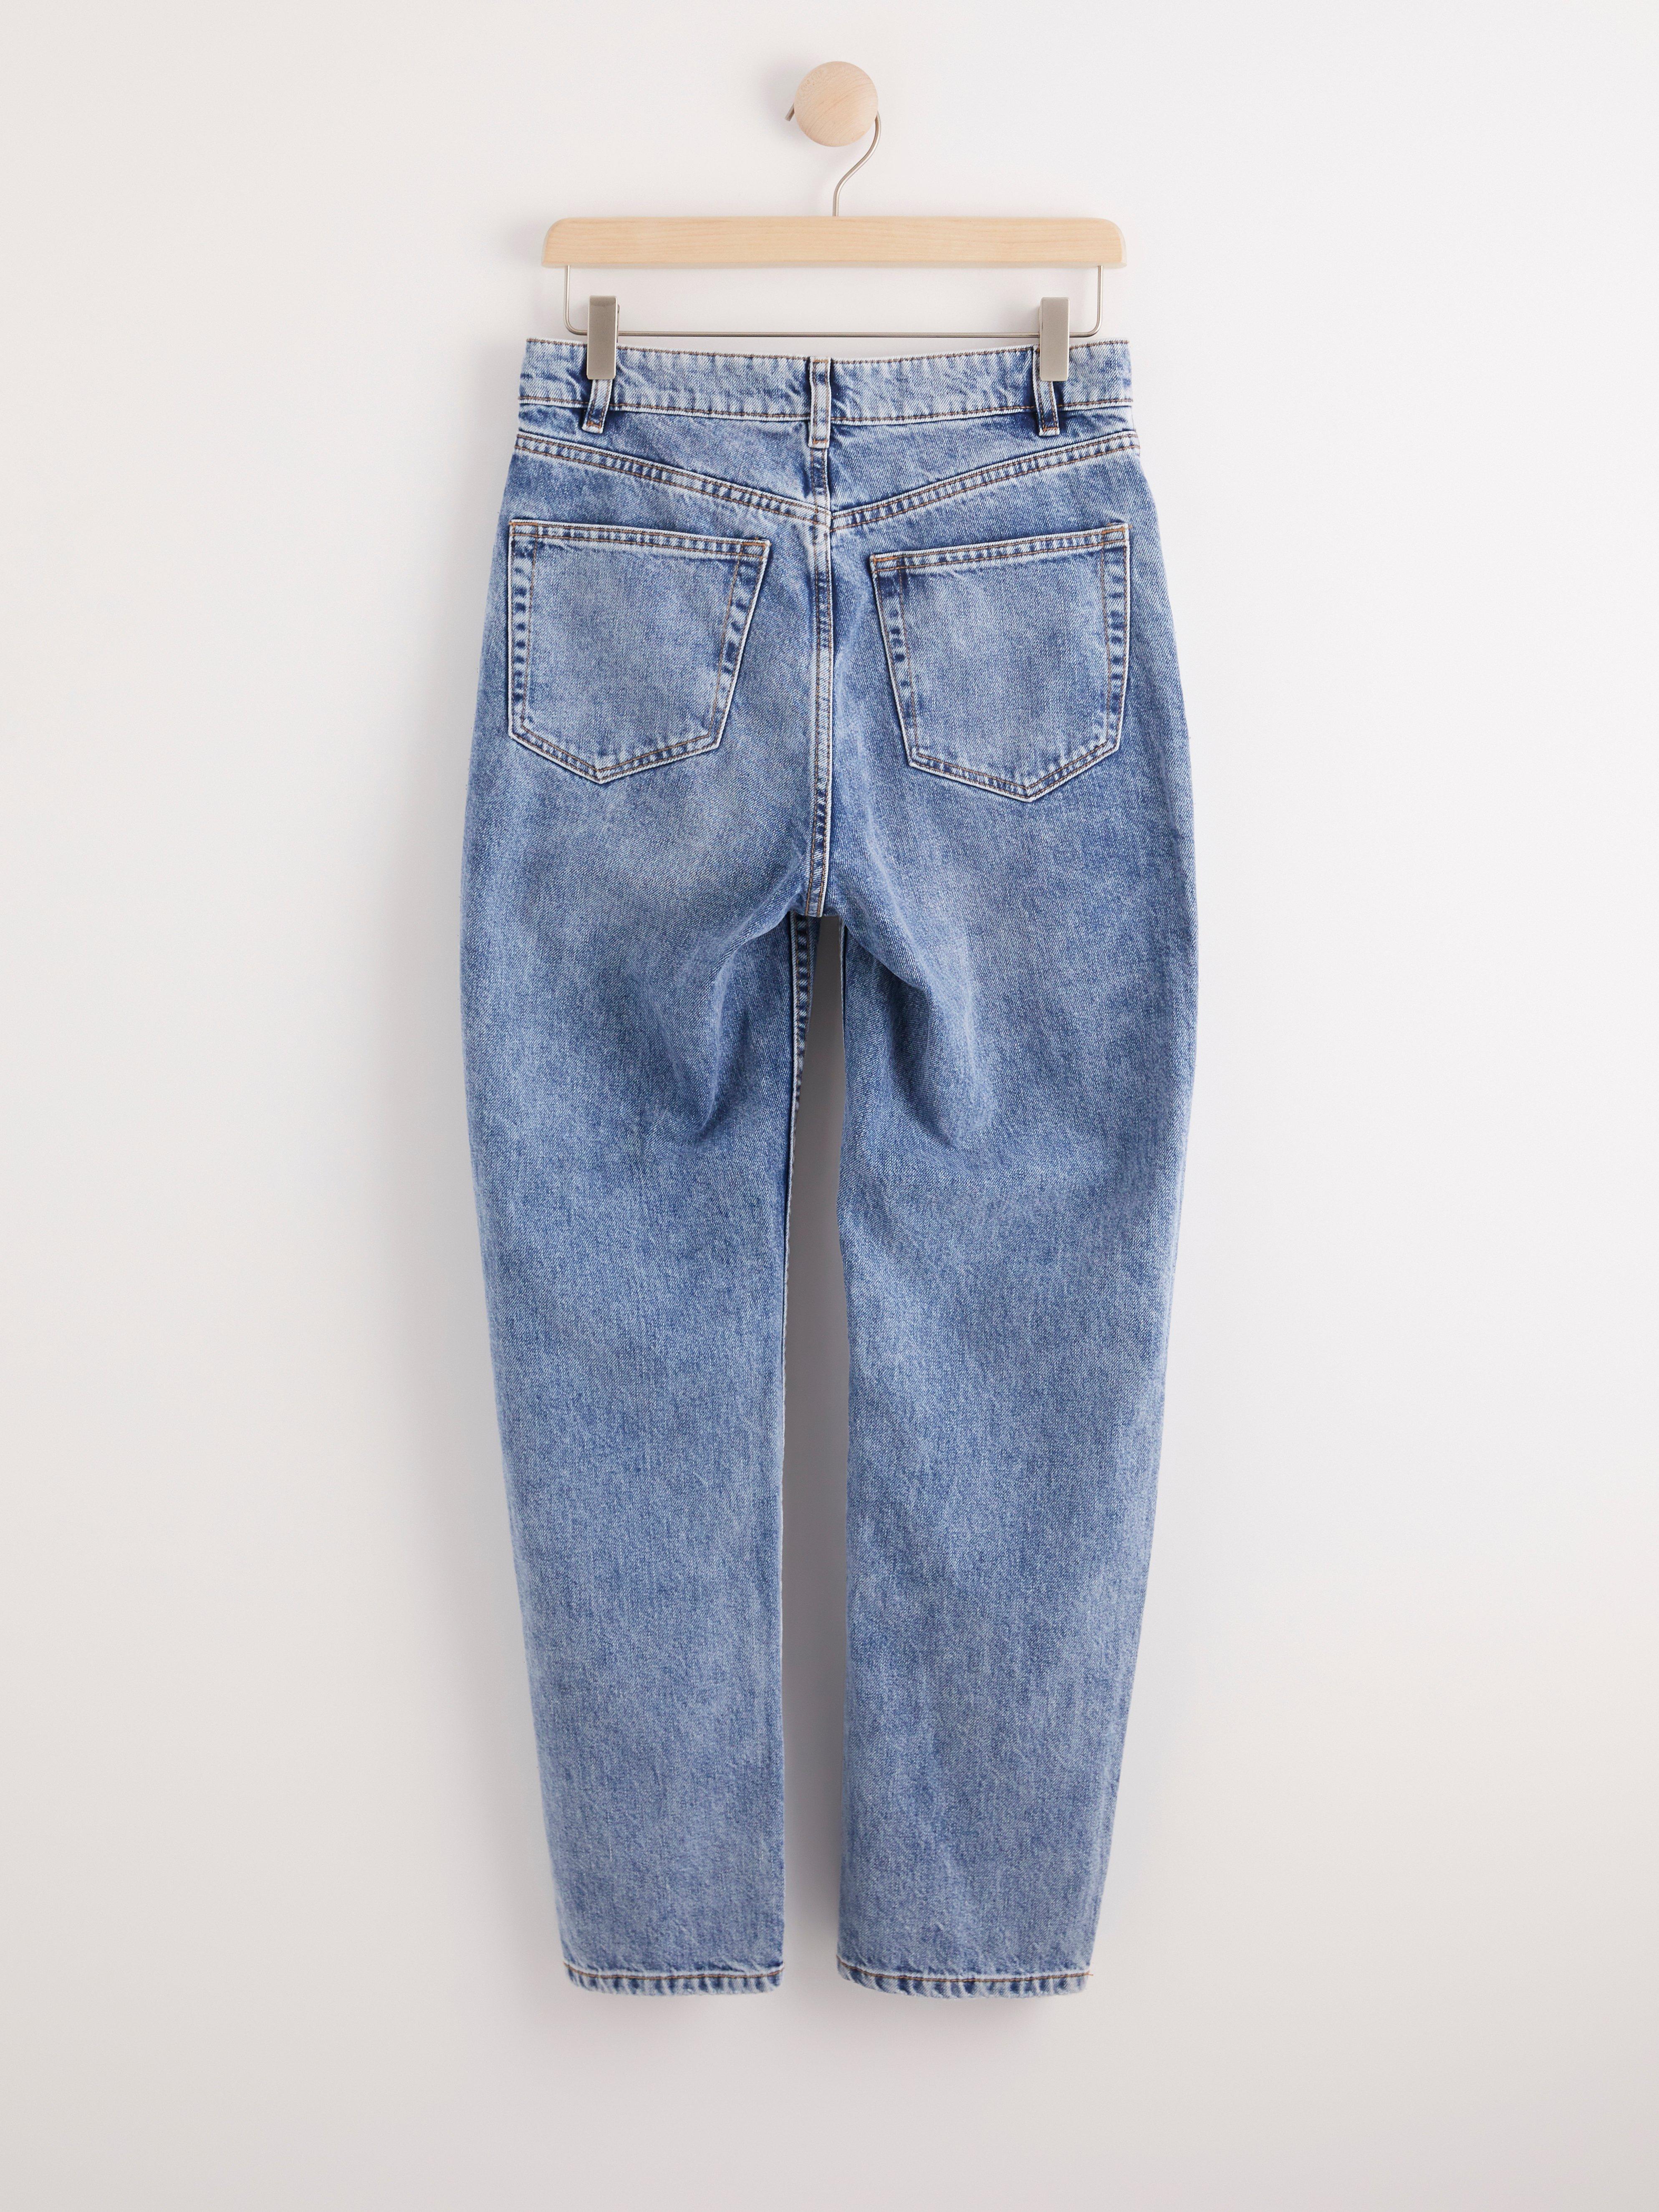 betty blue jeans